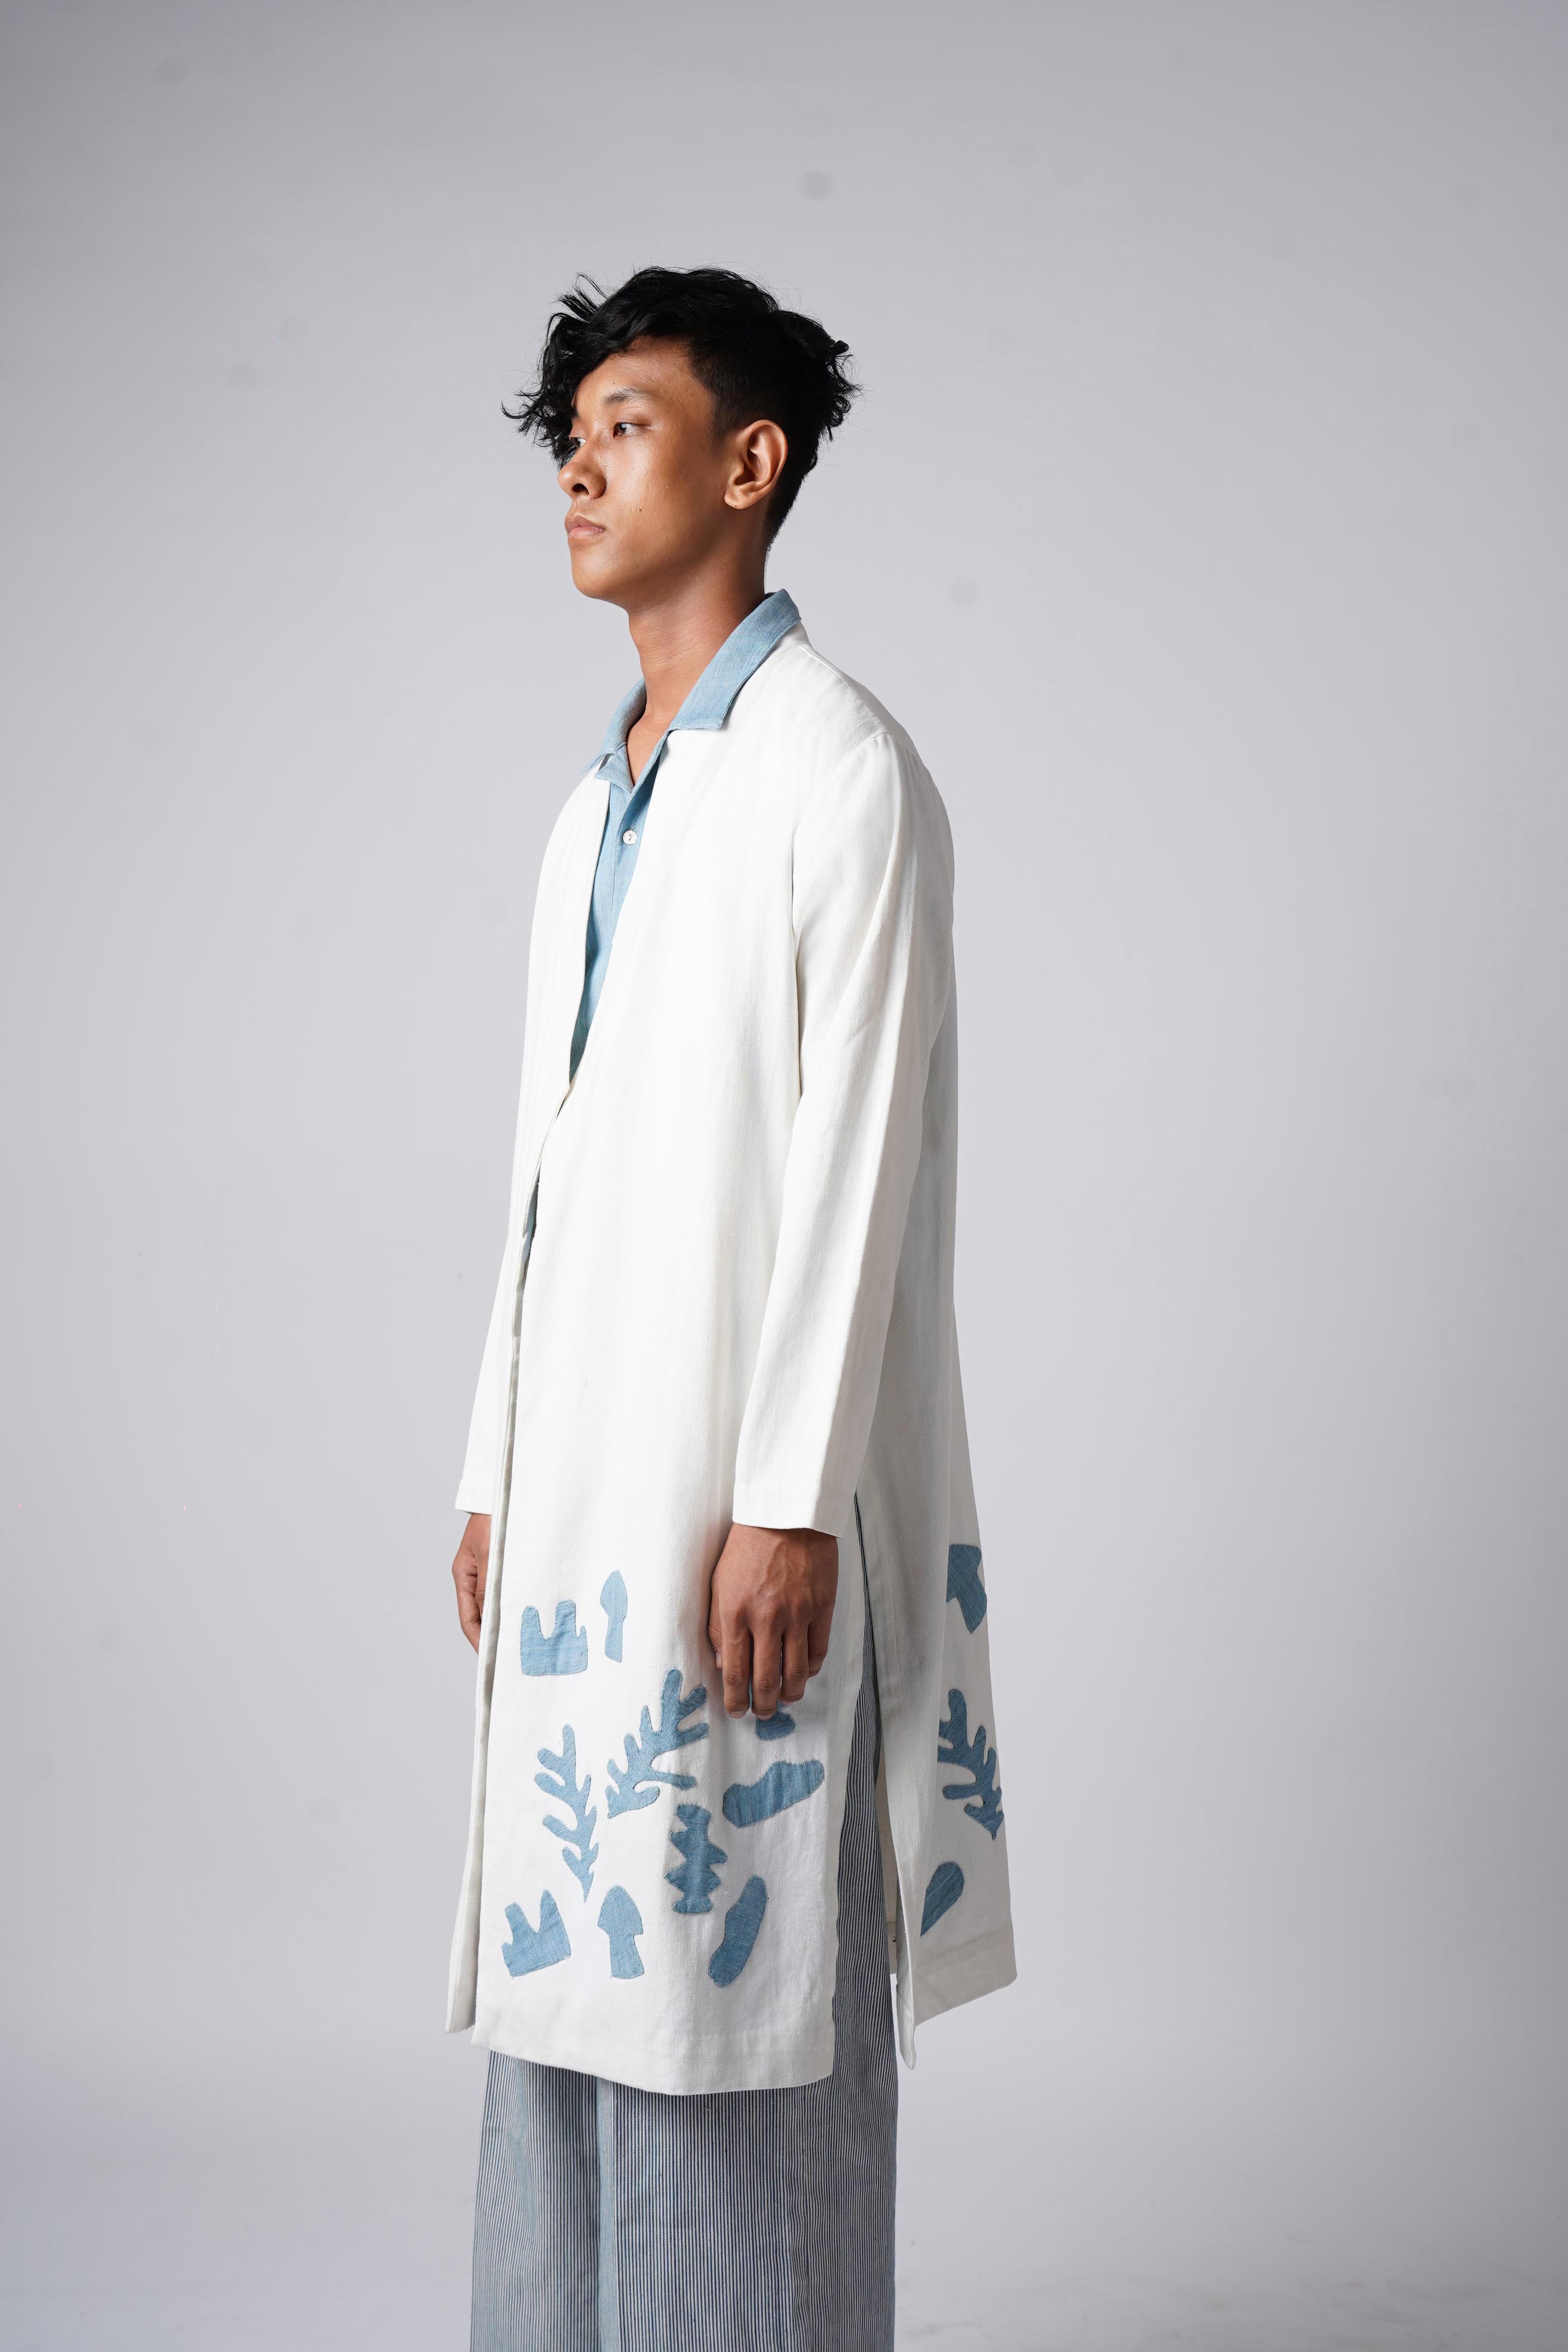 Enchanter jacket with contrast organic shapes as hand applique. – URA MAKU